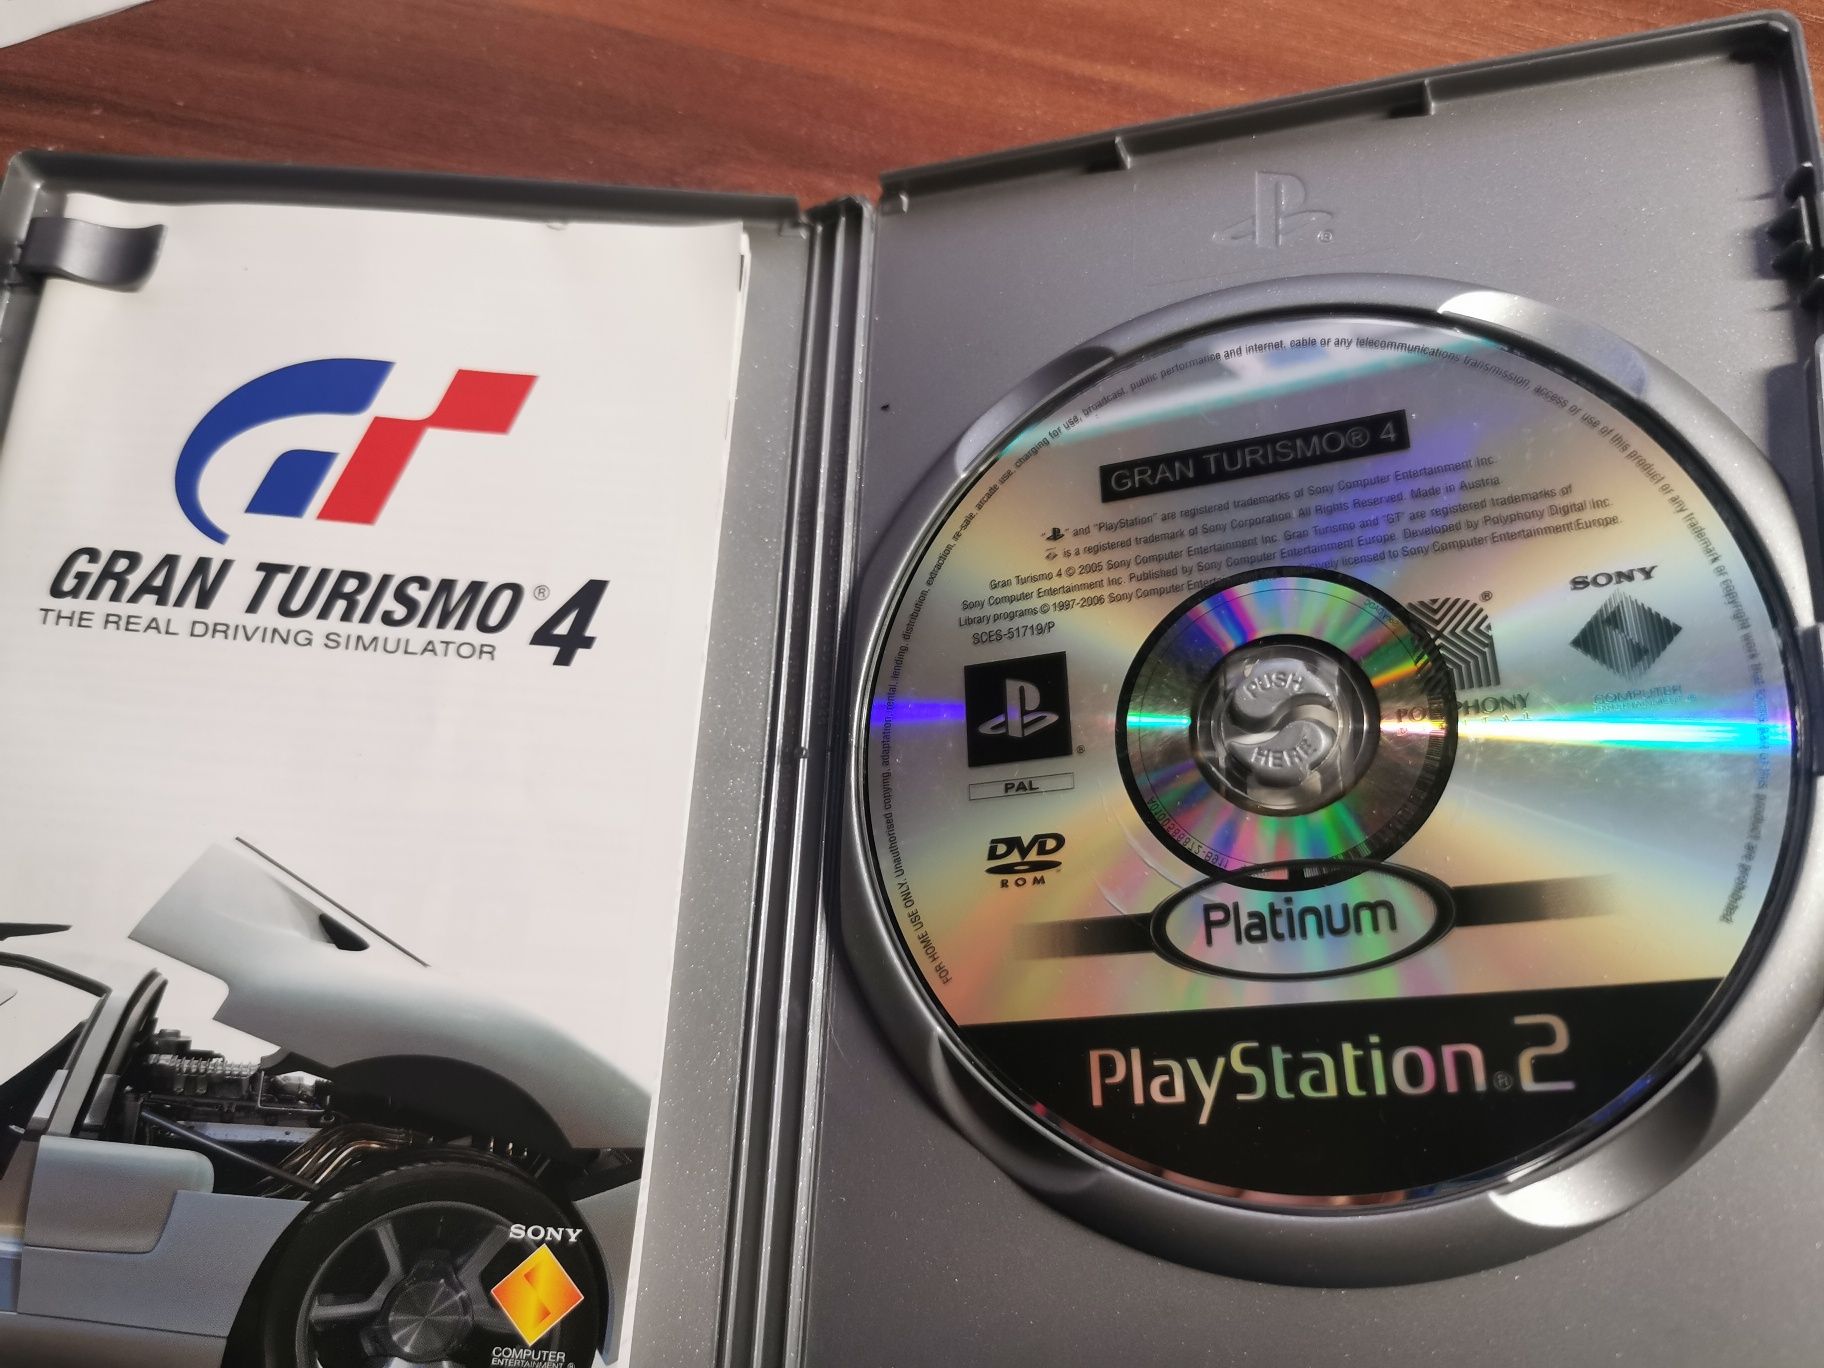 Gran Turismo 4 PlayStation 2 sony